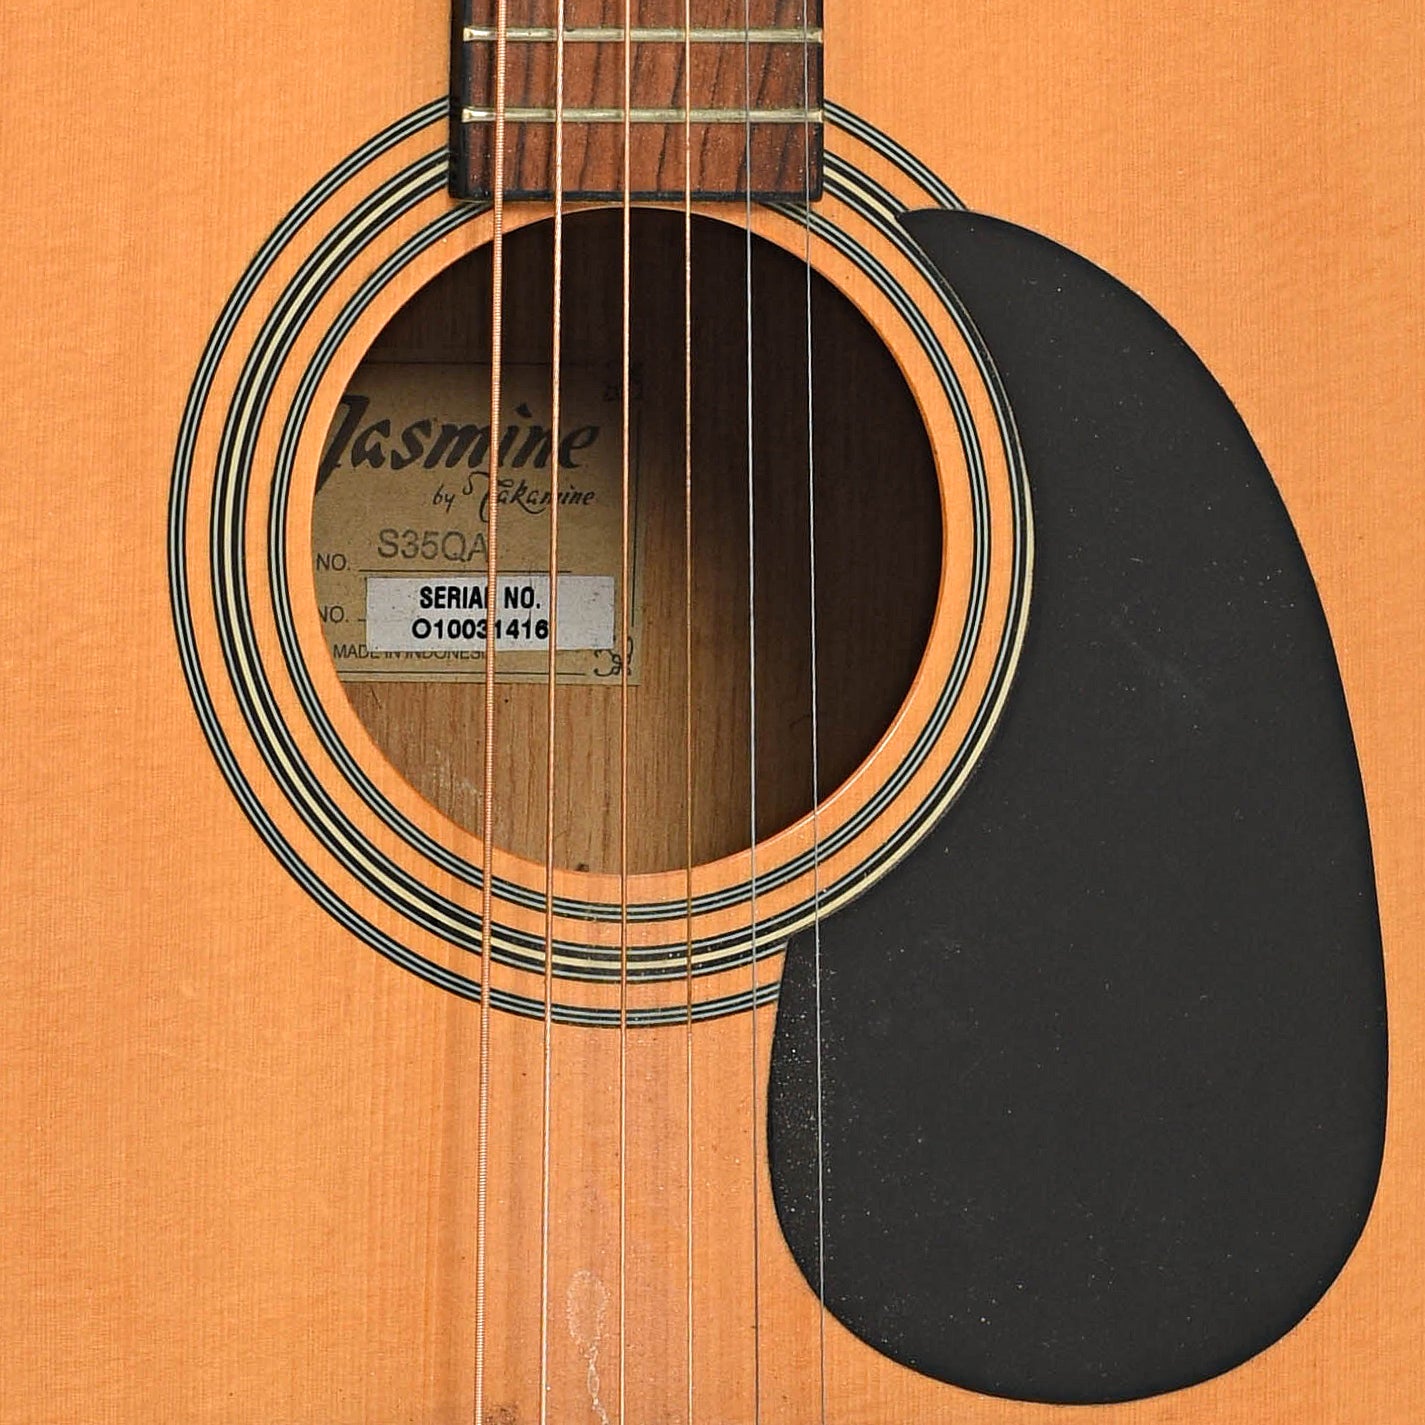 Sound hole of Jasmine S35QA Acoustic Guitar